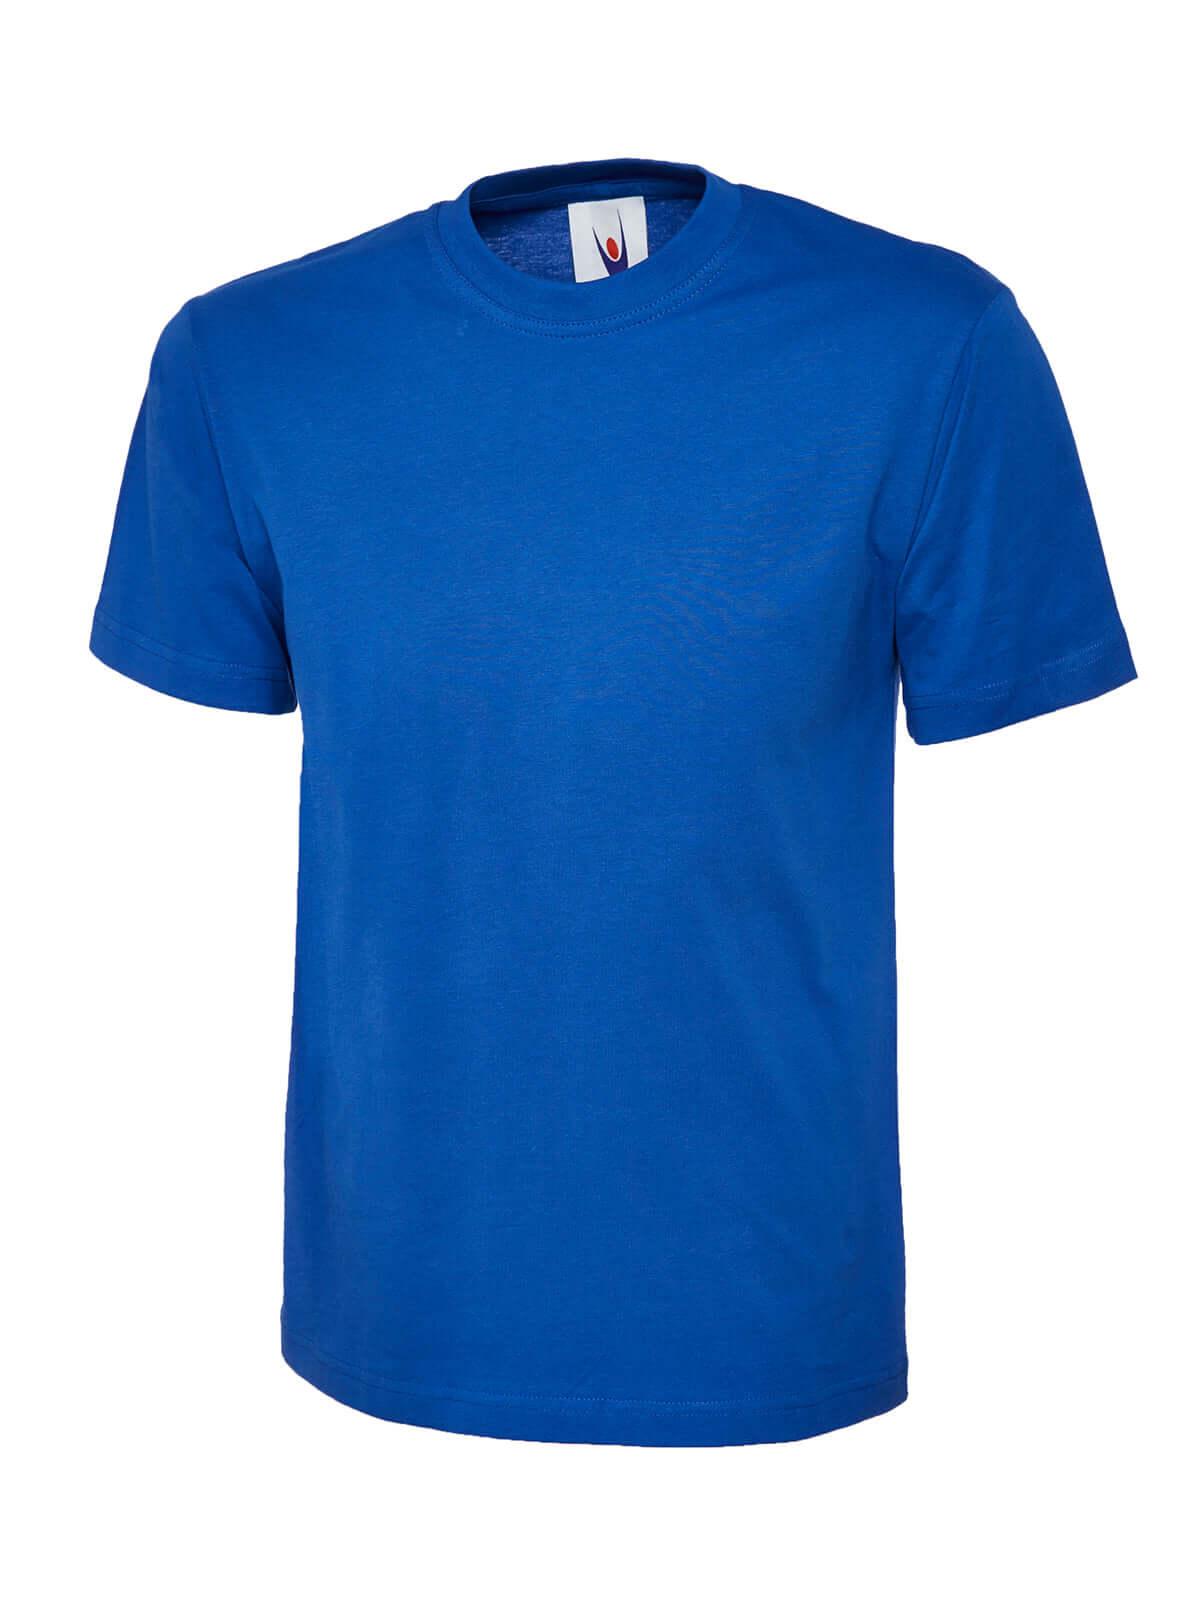 Pegasus Uniform Classic T-shirt - Royal Blue